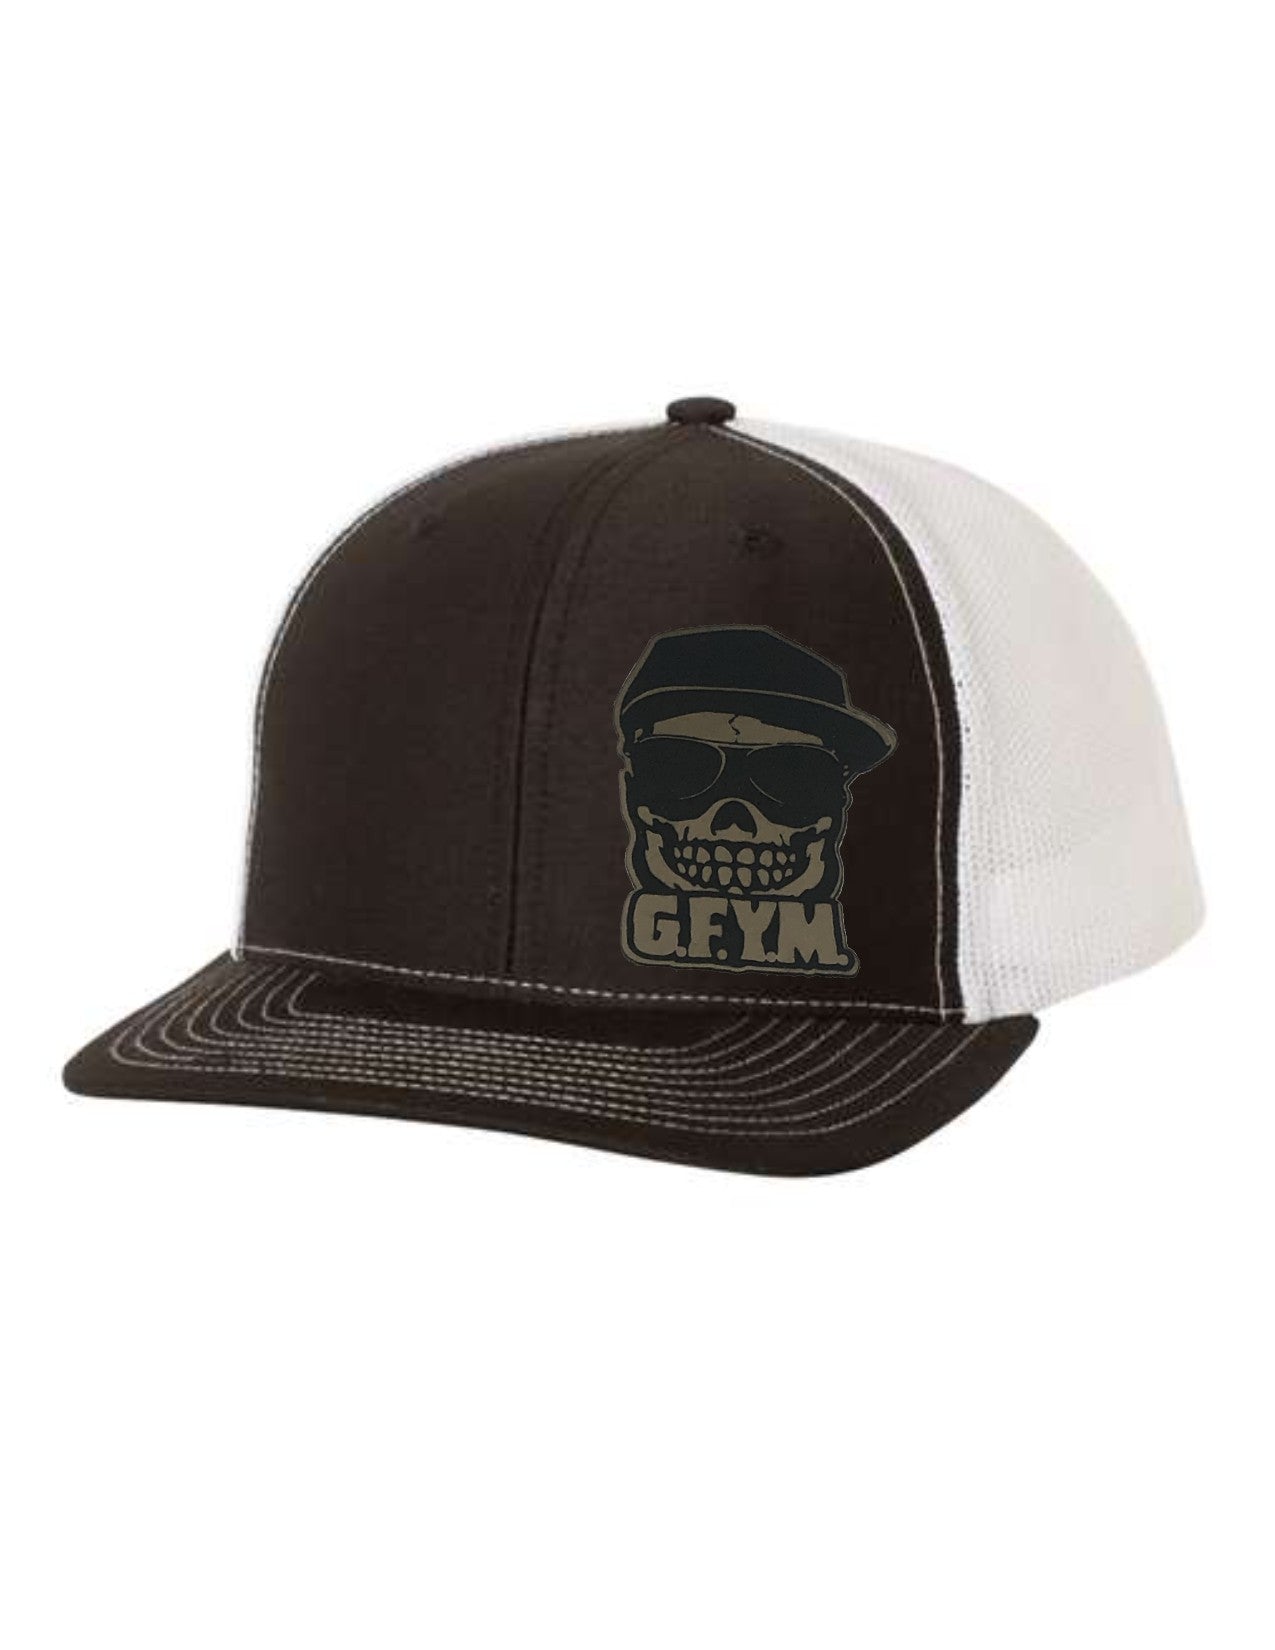 G.F.Y.M Skull Leather Patch Richardson 112 Trucker Hat